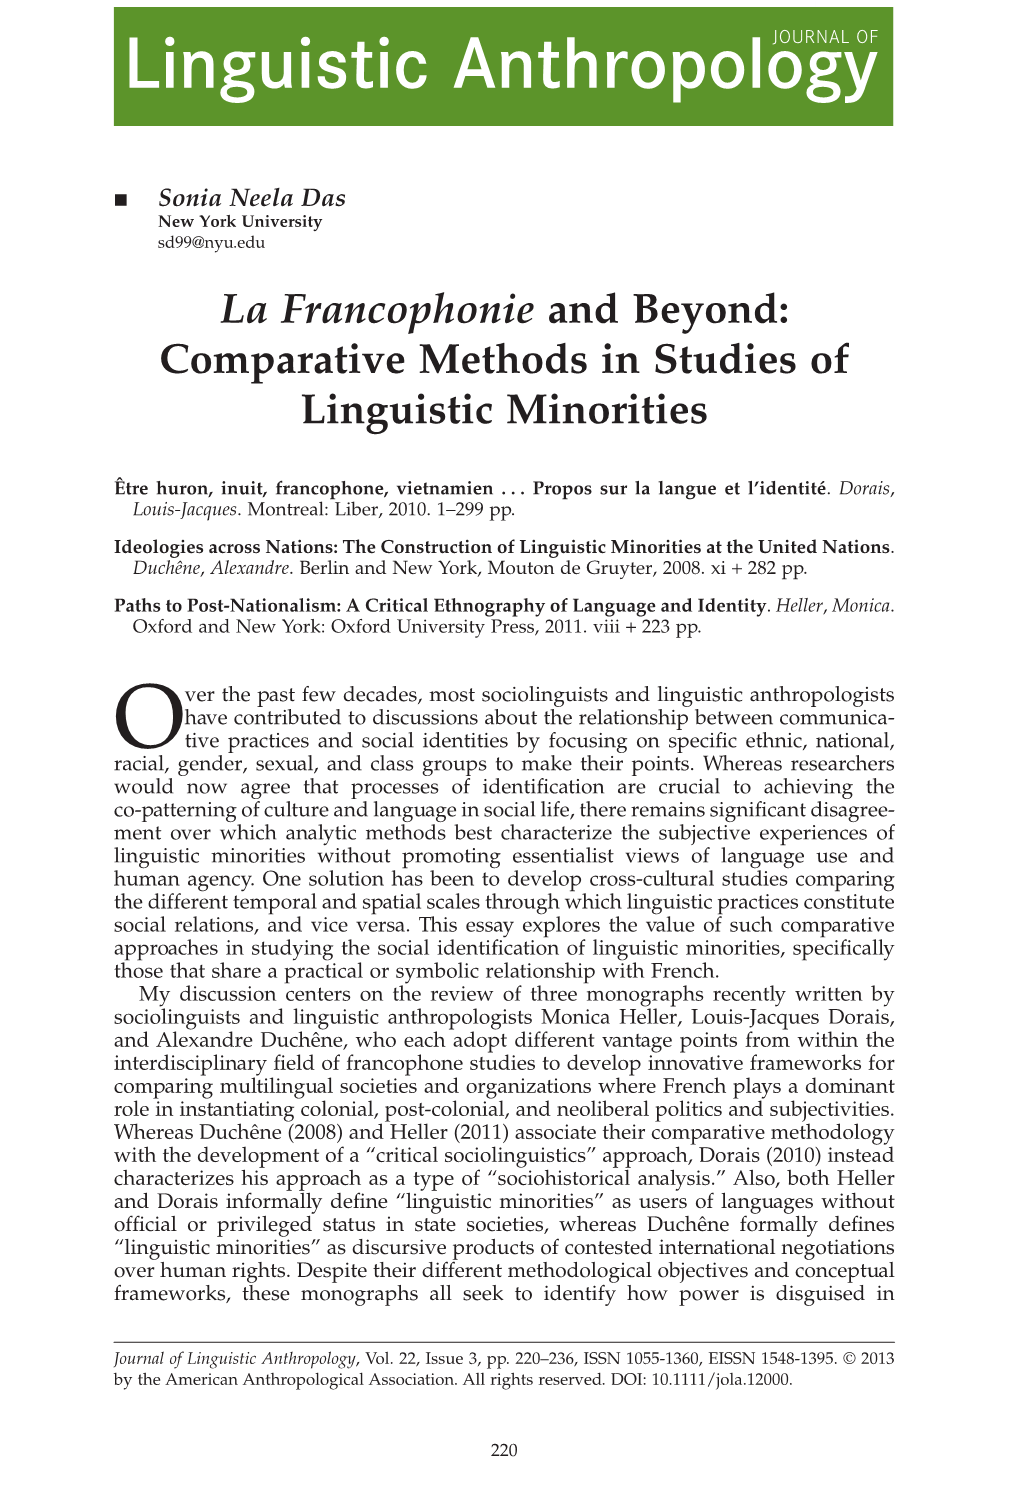 La Francophonie and Beyond: Comparative Methods in Studies of Linguistic Minorities